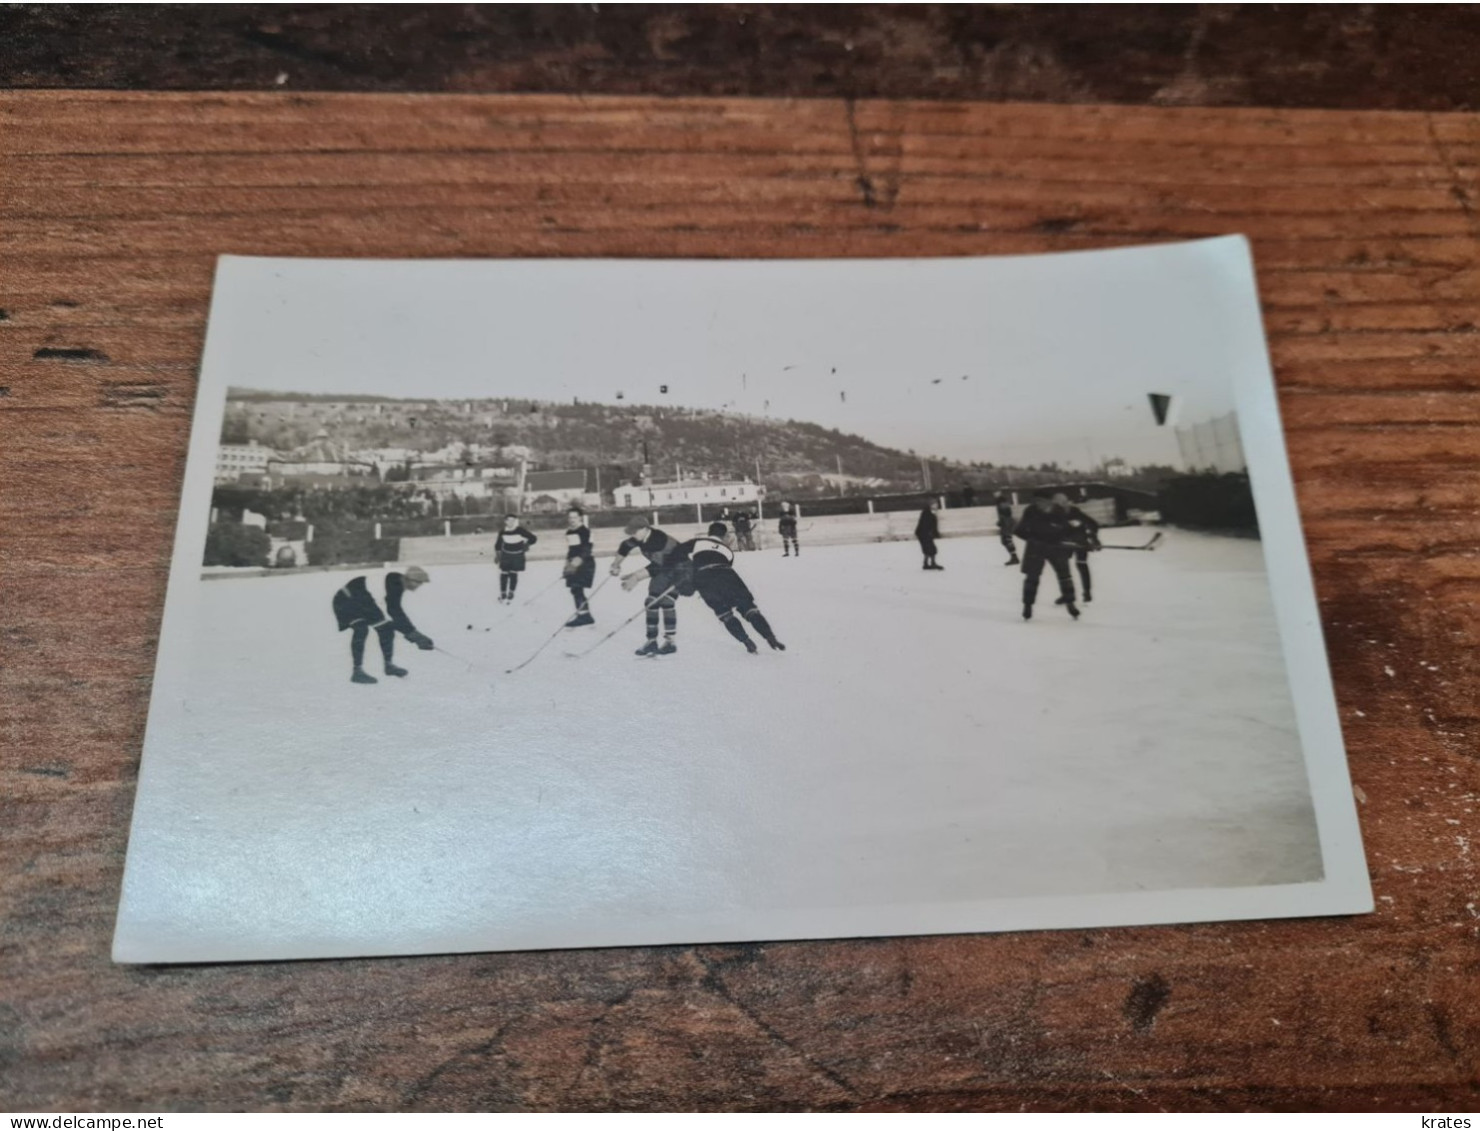 Postcard - Hockey   (32976) - Wintersport